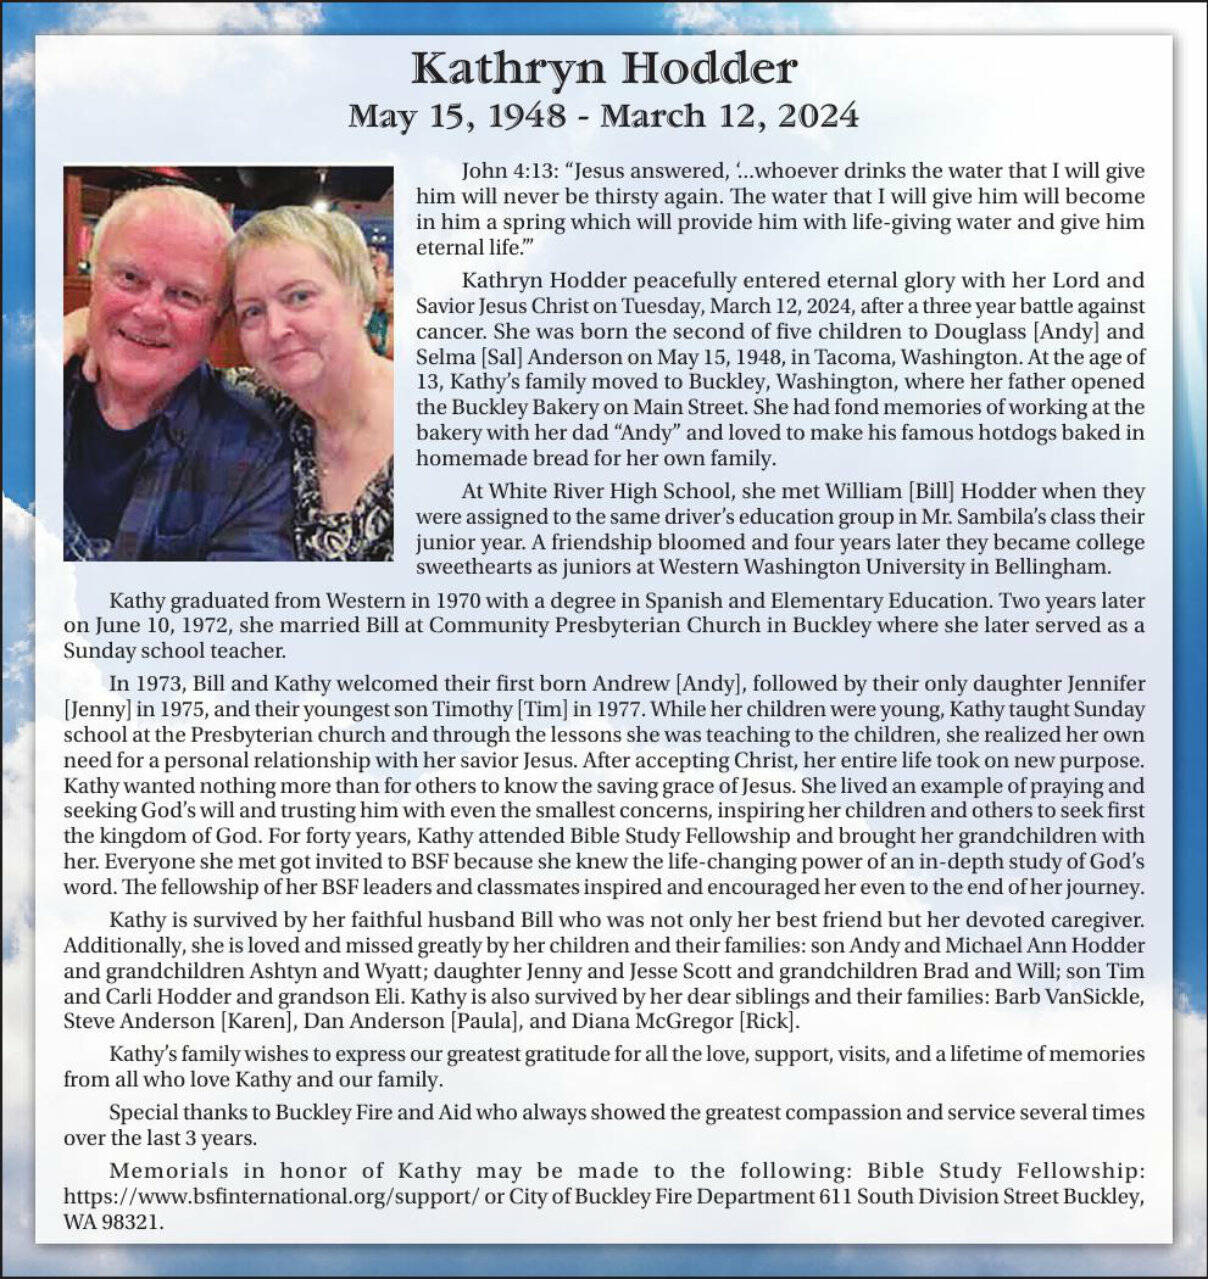 Obit for Kathryn Hodder